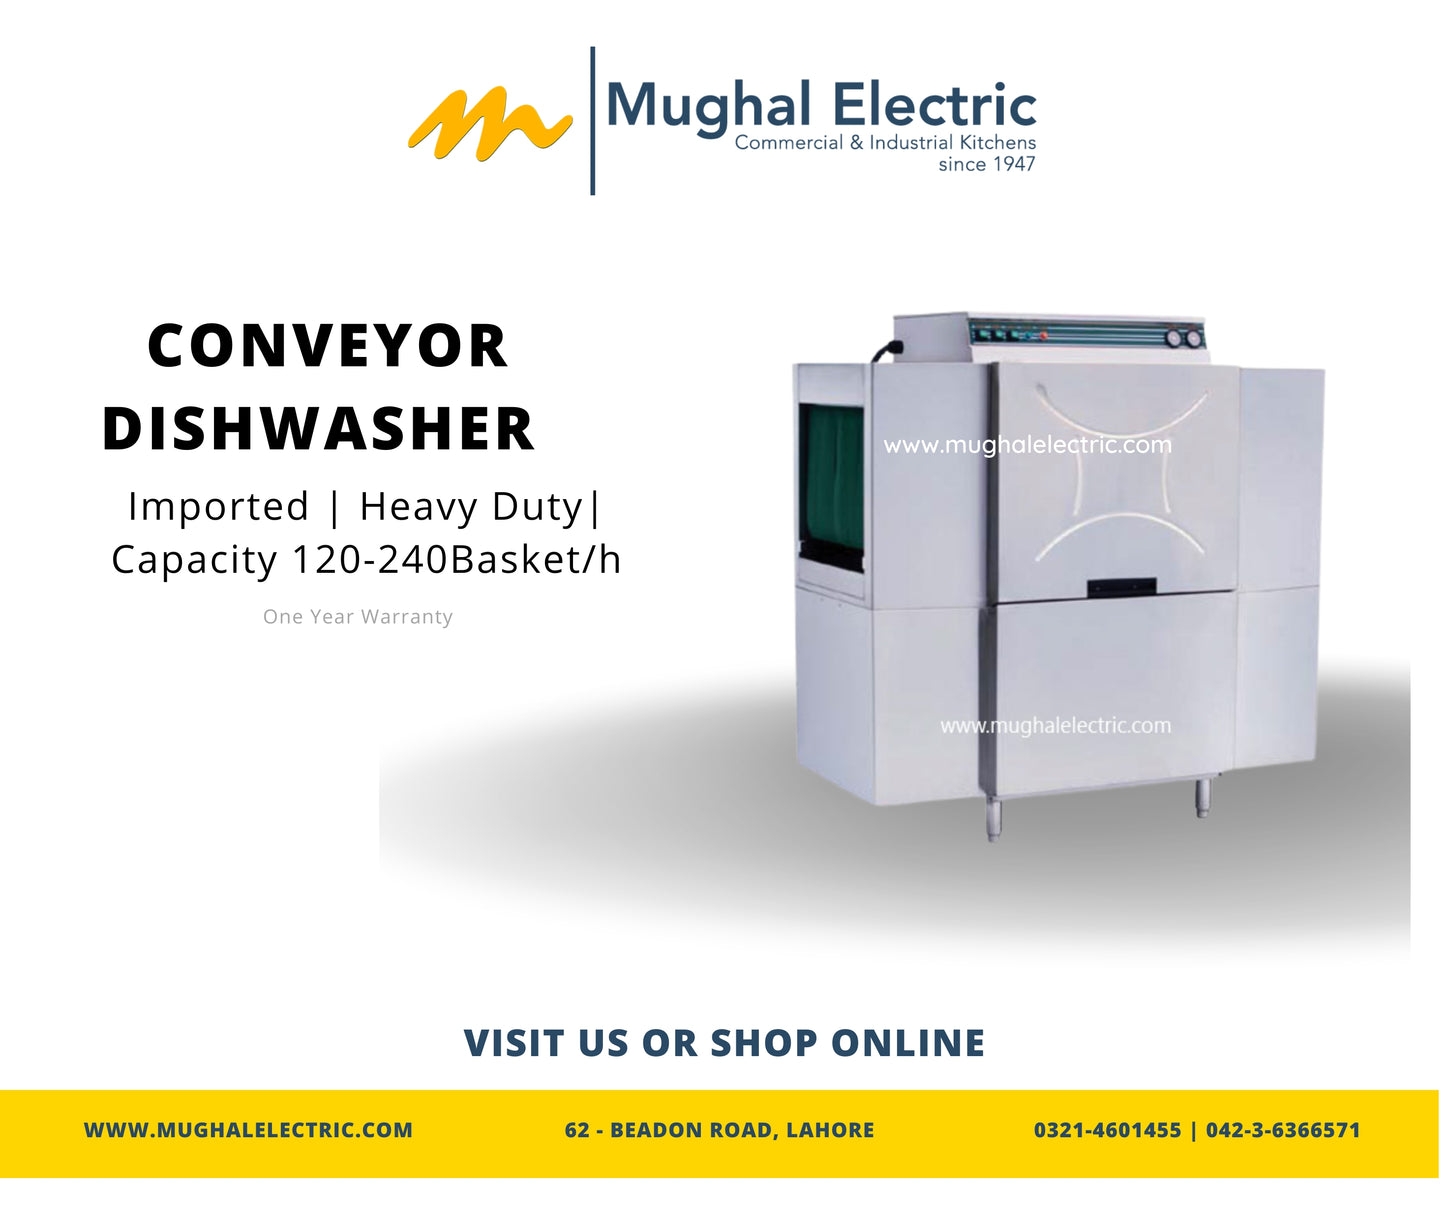 Electric Conveyor Dishwasher